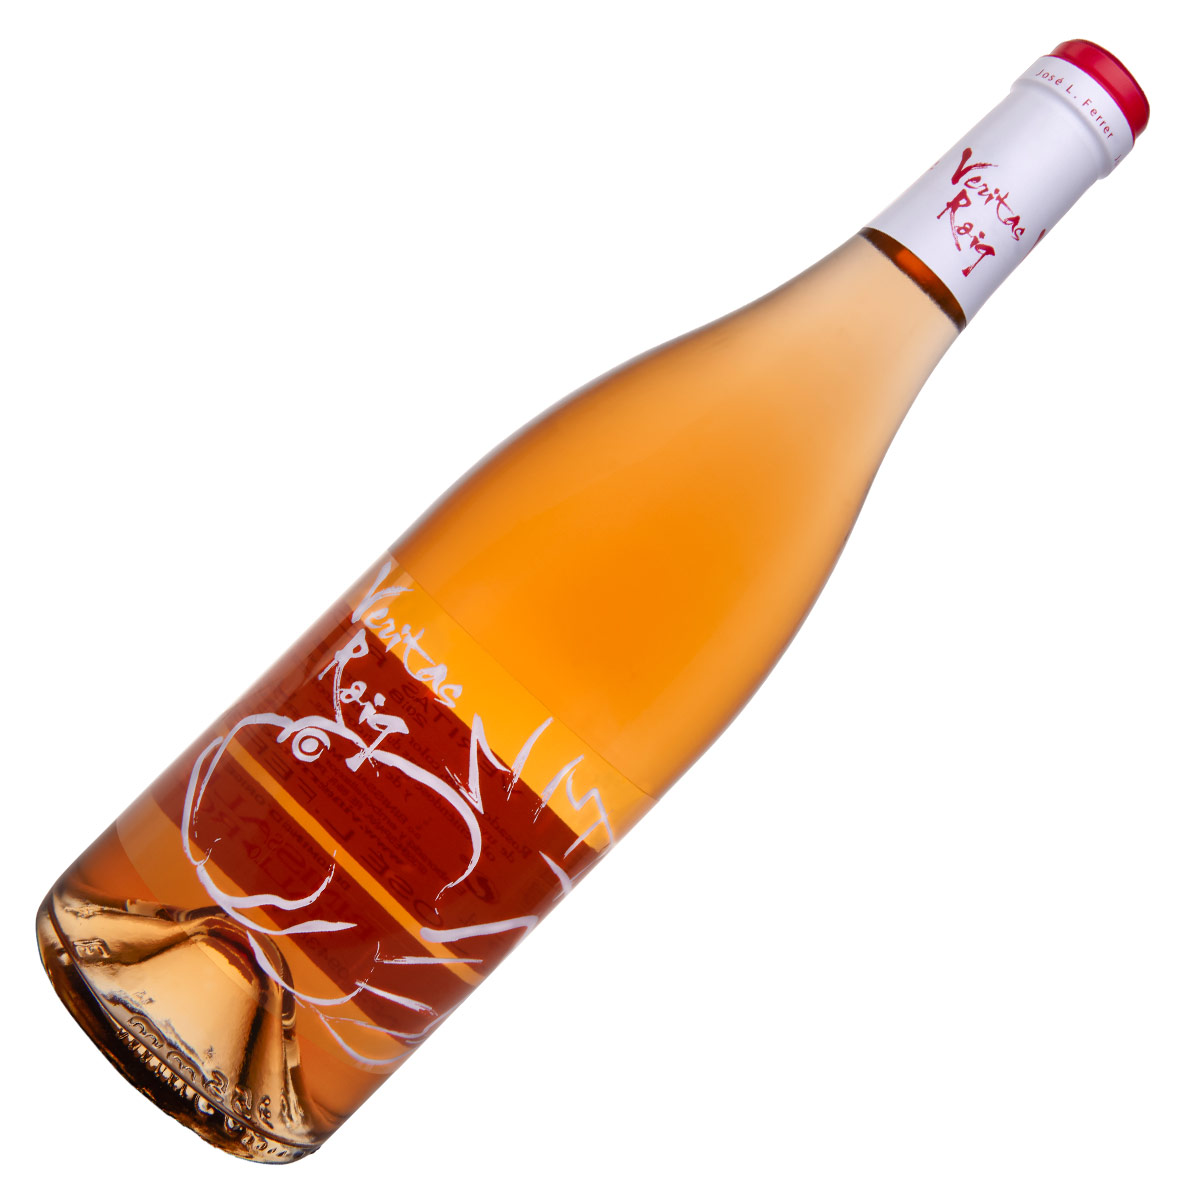 Ferrer Veritas Roig rosé wine D.O. Binissalem